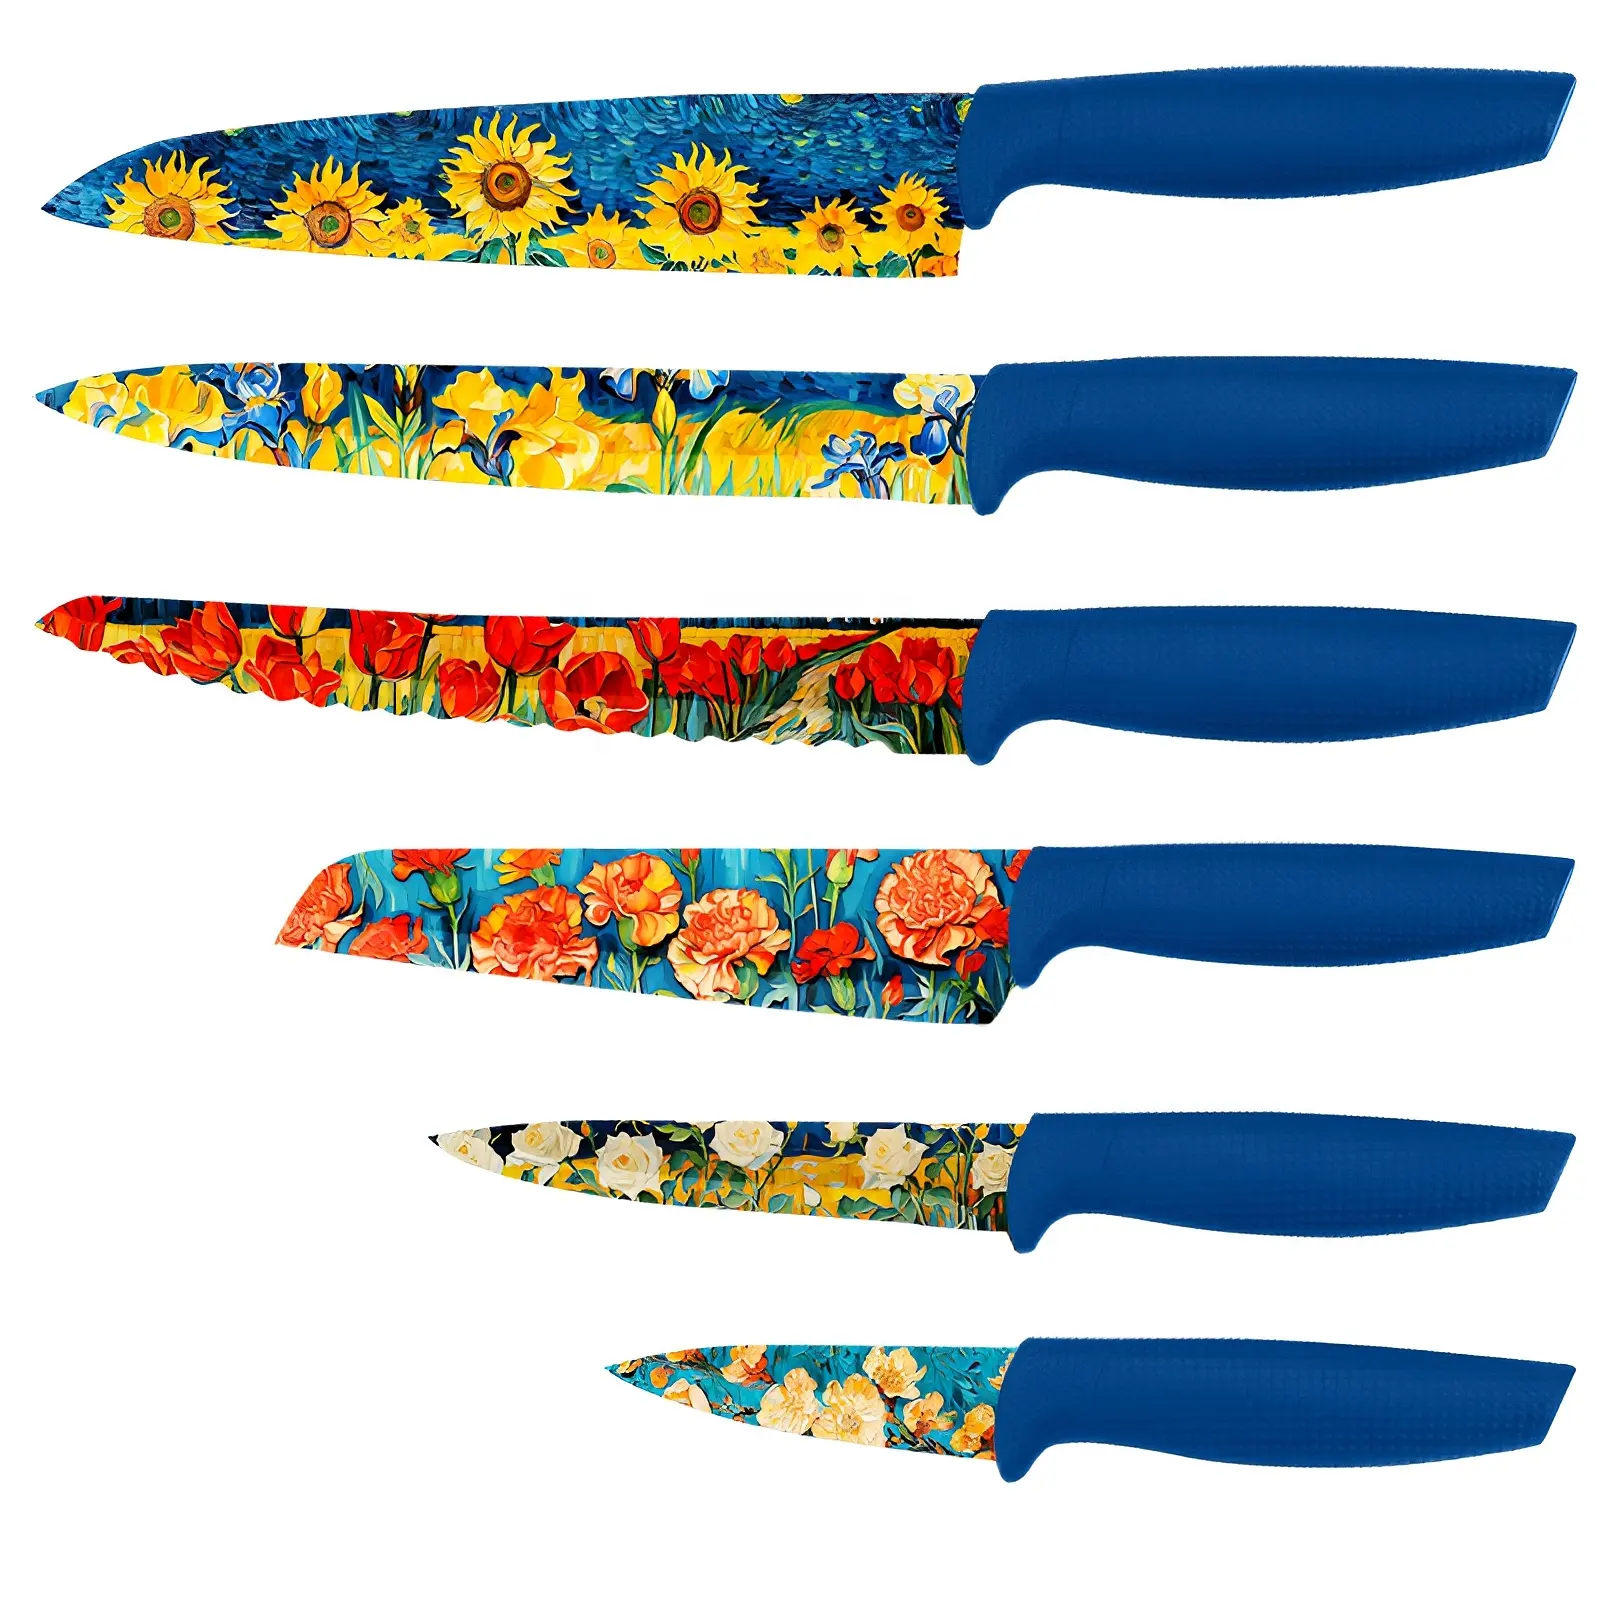 TOALLWIN kitchen knife messer set cuchillos de cocina flowers pattern kitchen knives 3Cr13 stainless steel kitchen knife set